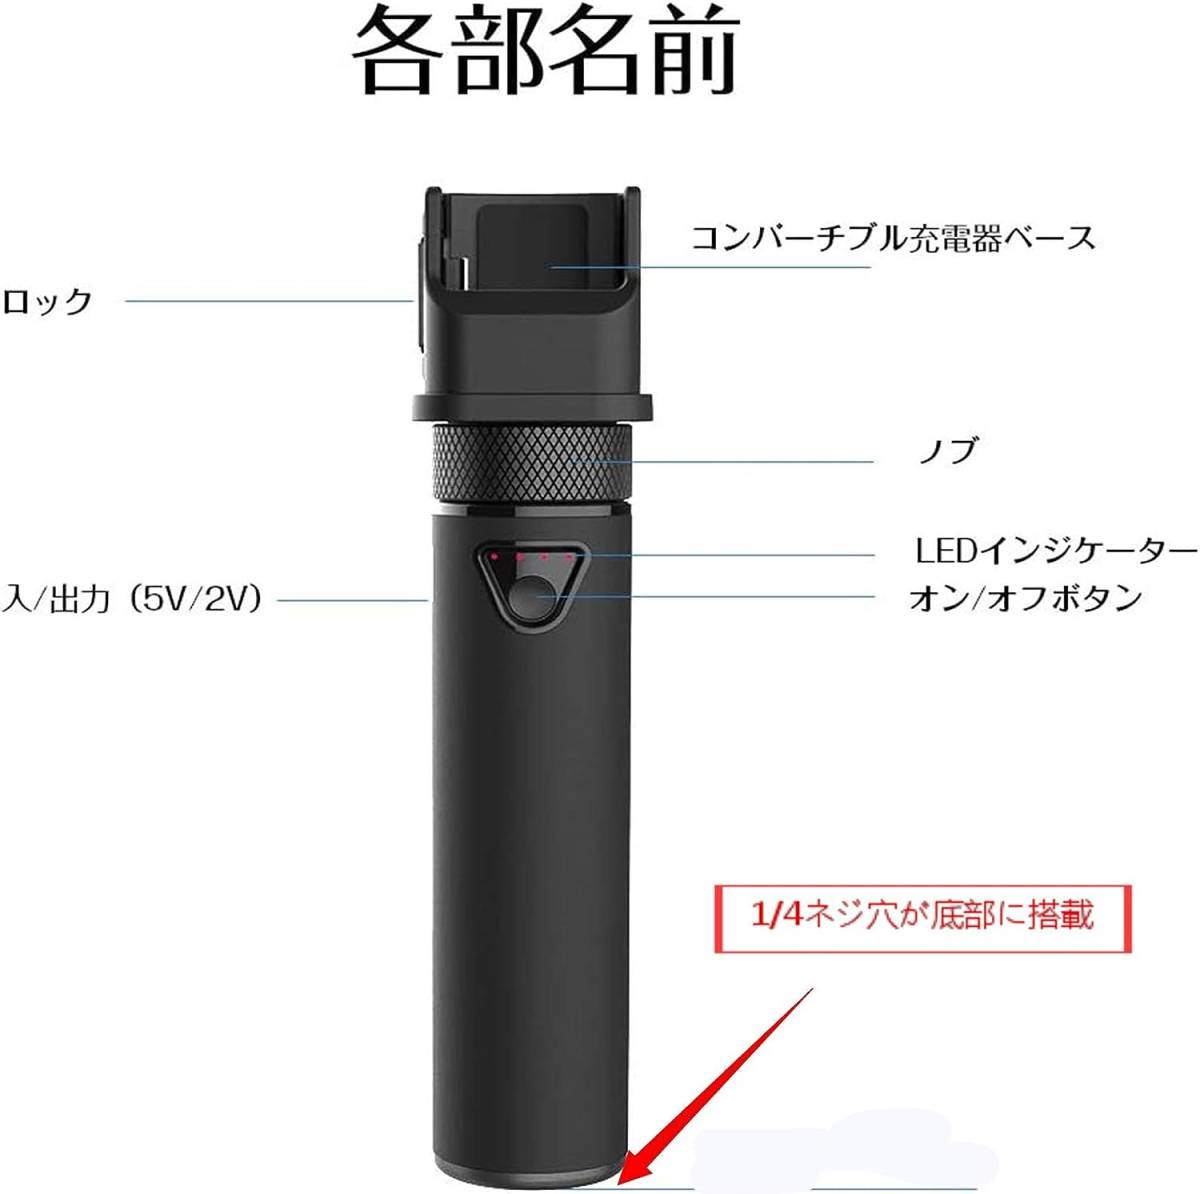 Osmo pocket 2/1互換 Type-C USB充電ホルダー 充電ベース 5000mAhバッテリー内蔵 ケーブル/日本語説明書付属 DJI OSMOポケット_画像3